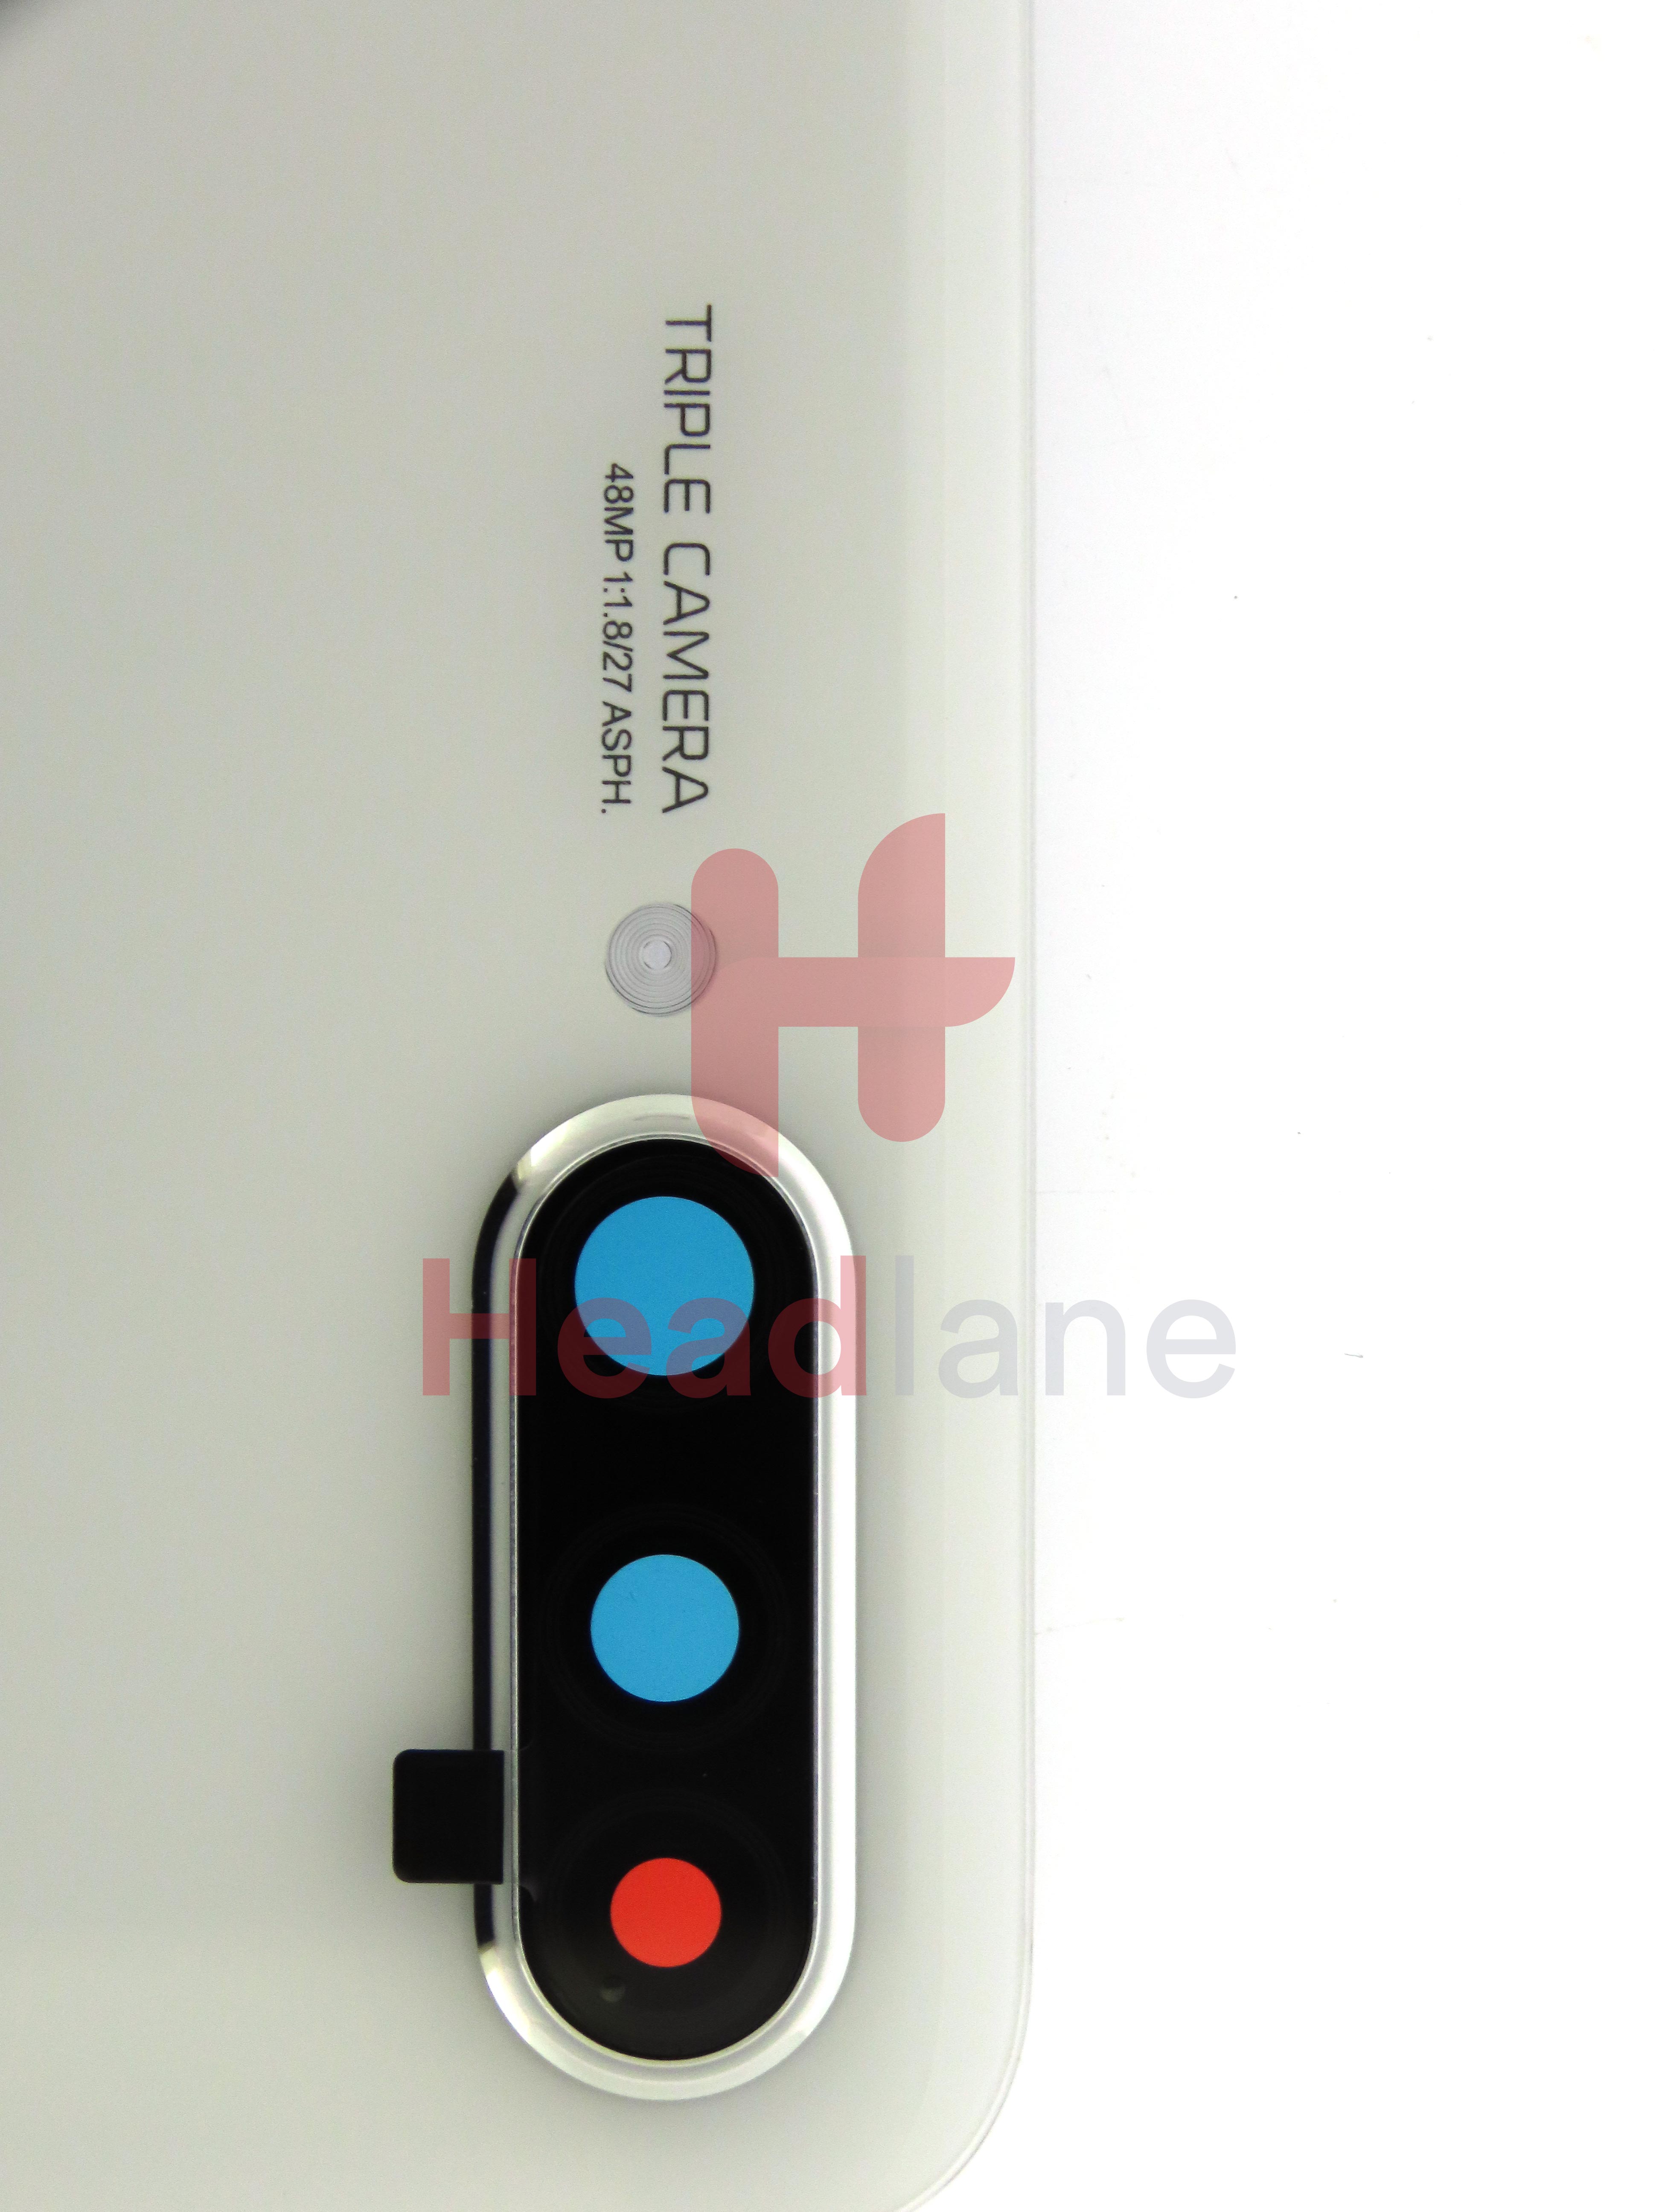 Huawei P30 Lite Back / Battery Cover + Fingerprint Sensor - Pearl White (MAR-LX1A 48MP Rear Camera)